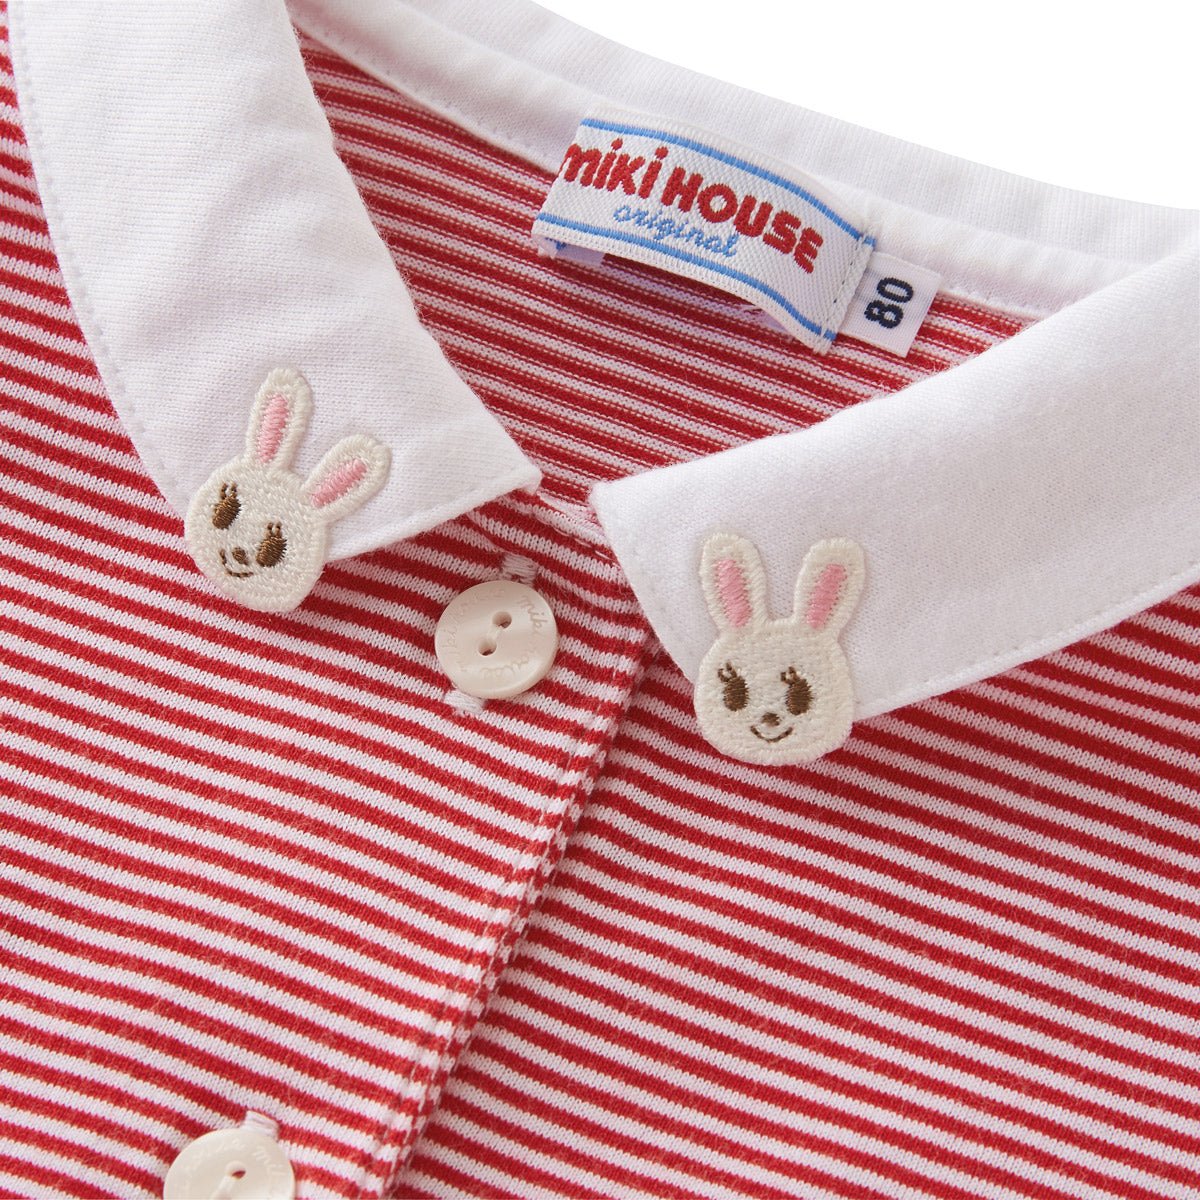 Bunny on Collar Shirt - 10-5401-454-02-80